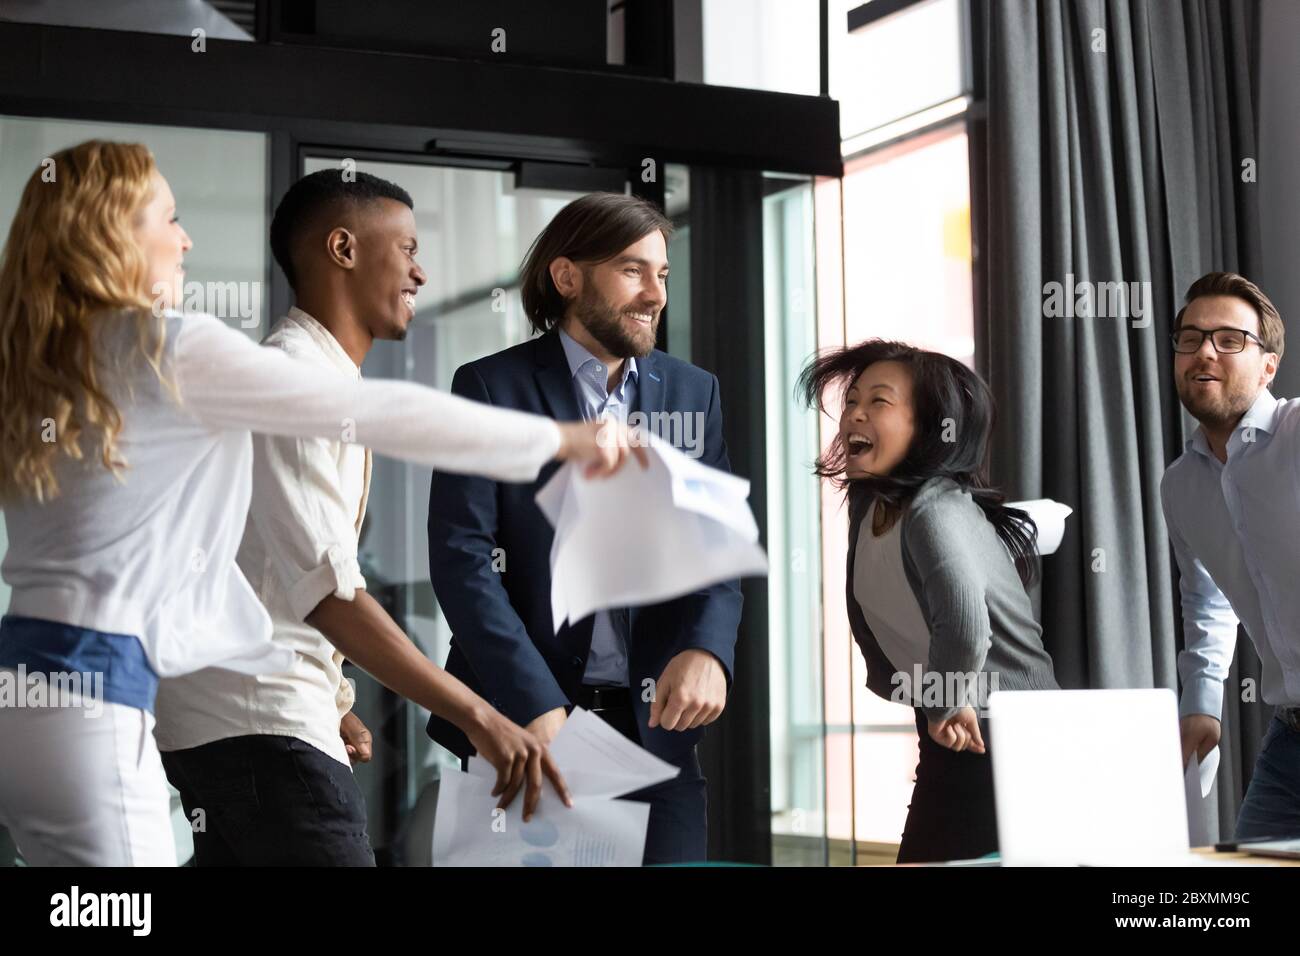 Multiracial staff screaming with joy dancing having fun at workplace Stock Photo